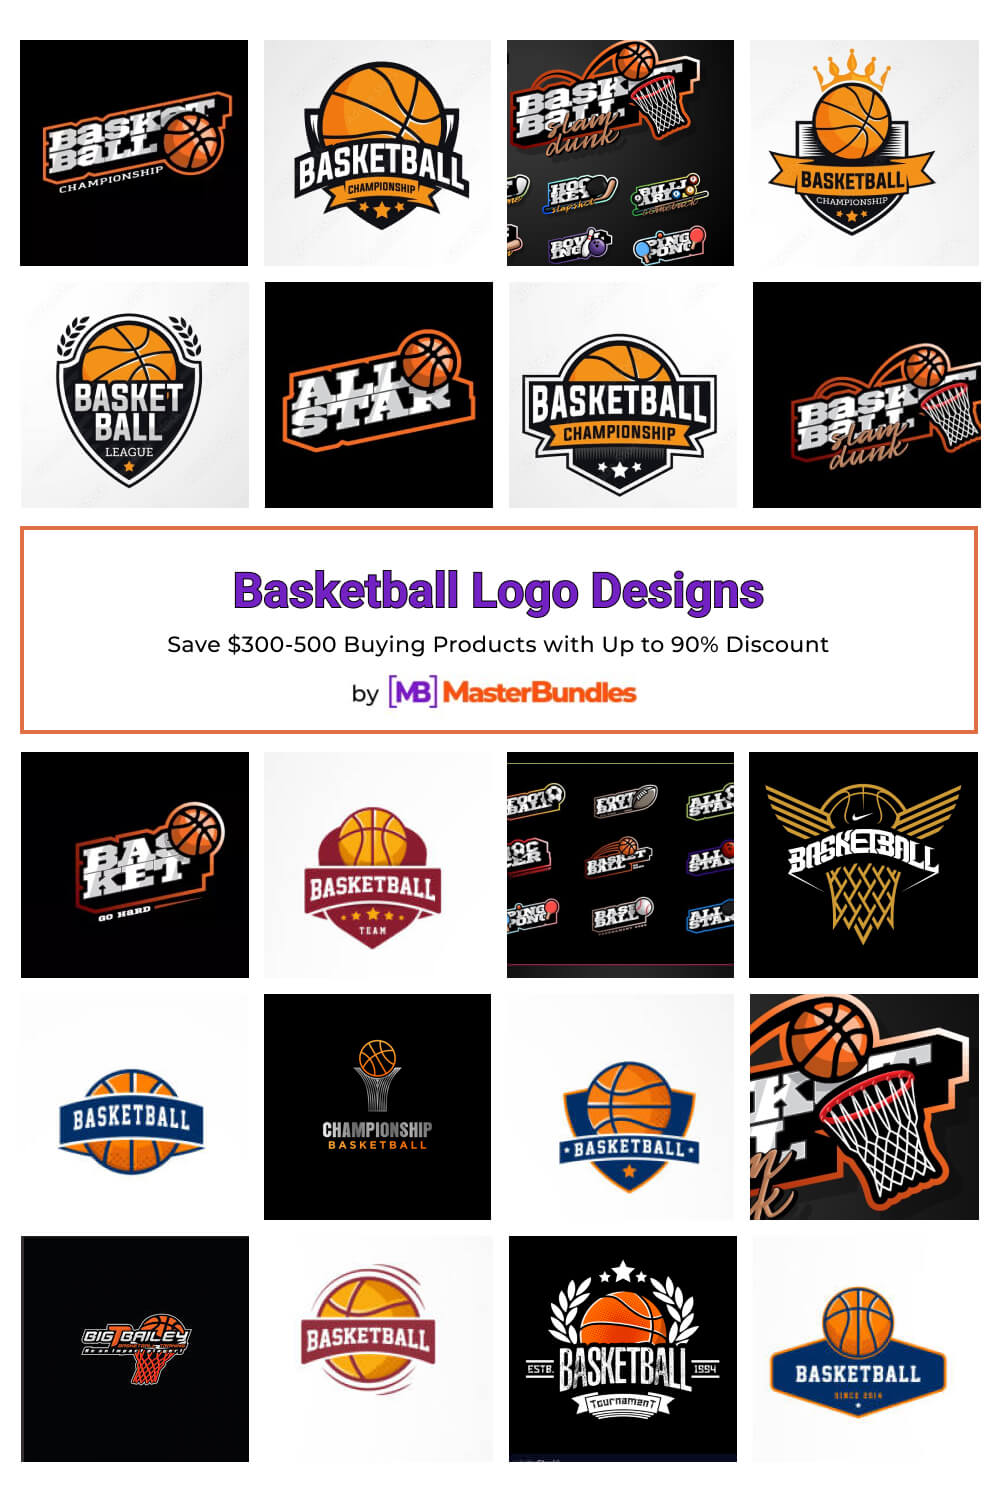 basketball logo designs pinterest image.